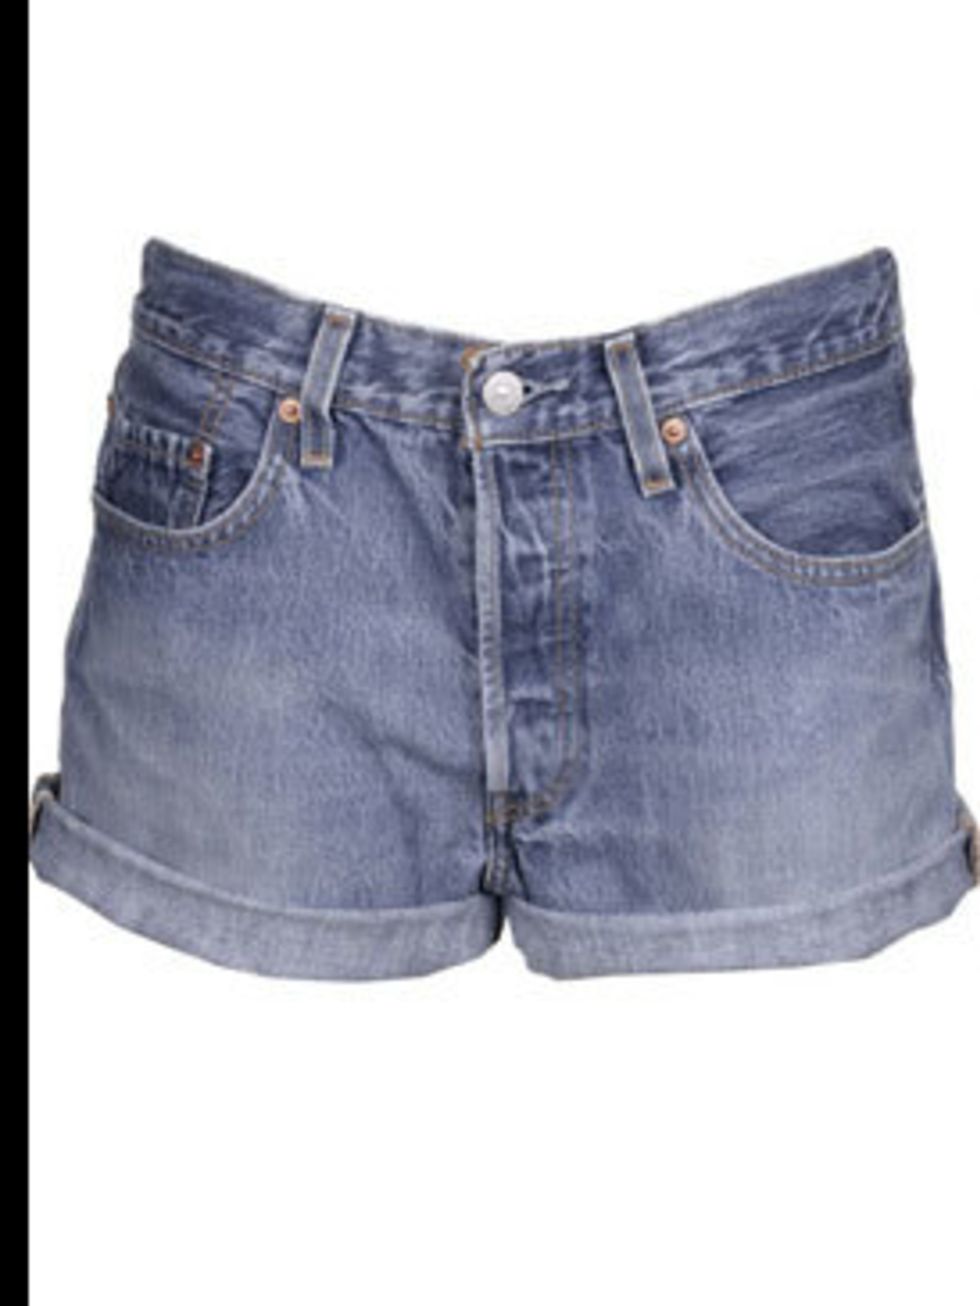 <p>Vintage denim shorts, £10, by Levi's at Rokit</p>